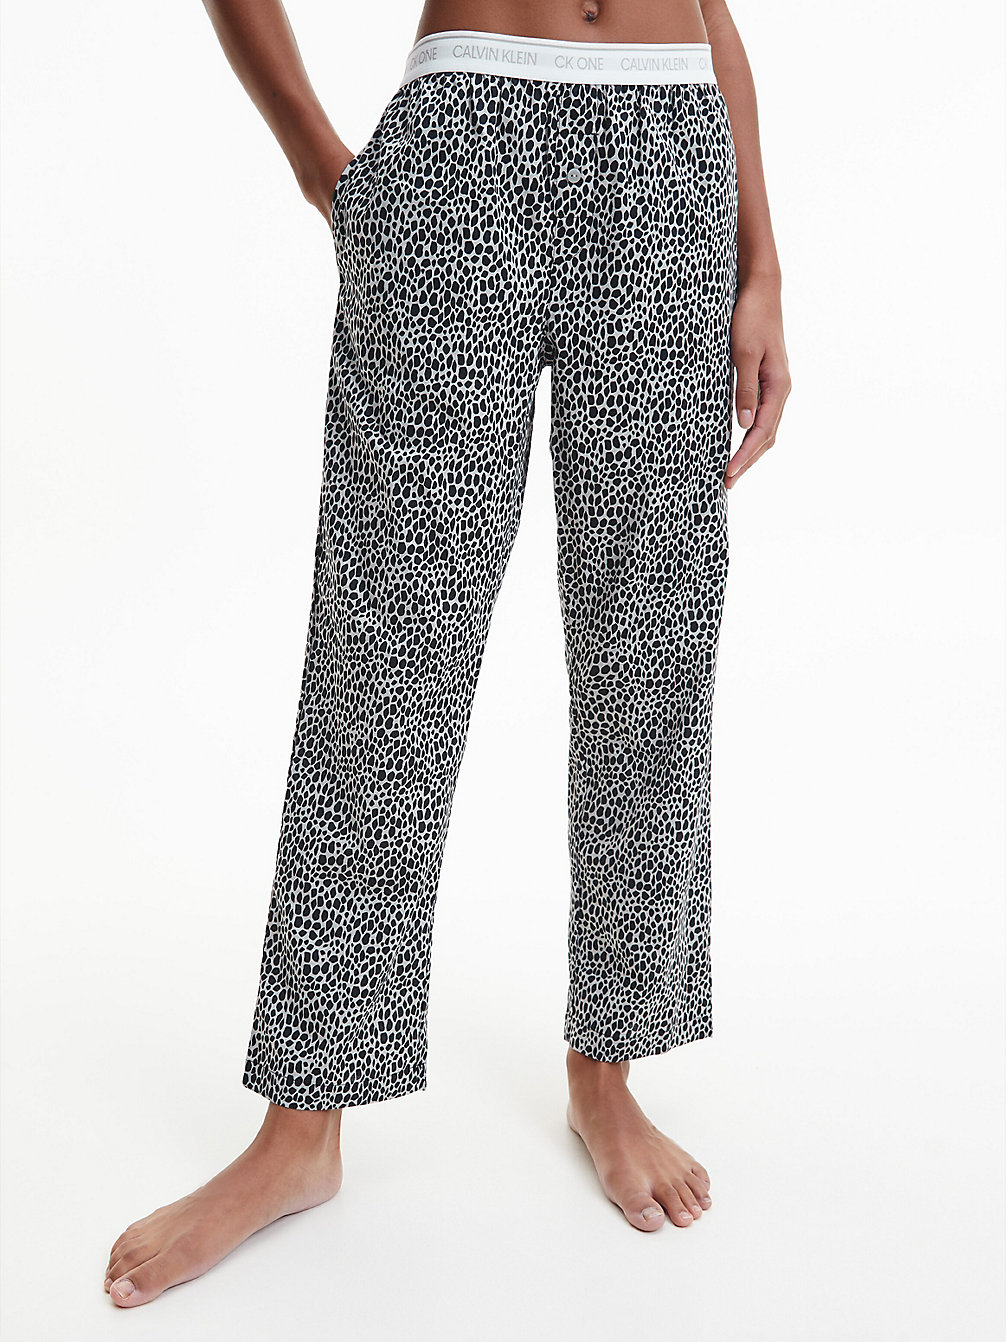 MINI GIRAFFE PRINT_GREY HEATHER Pyjama Pants - CK One undefined women Calvin Klein